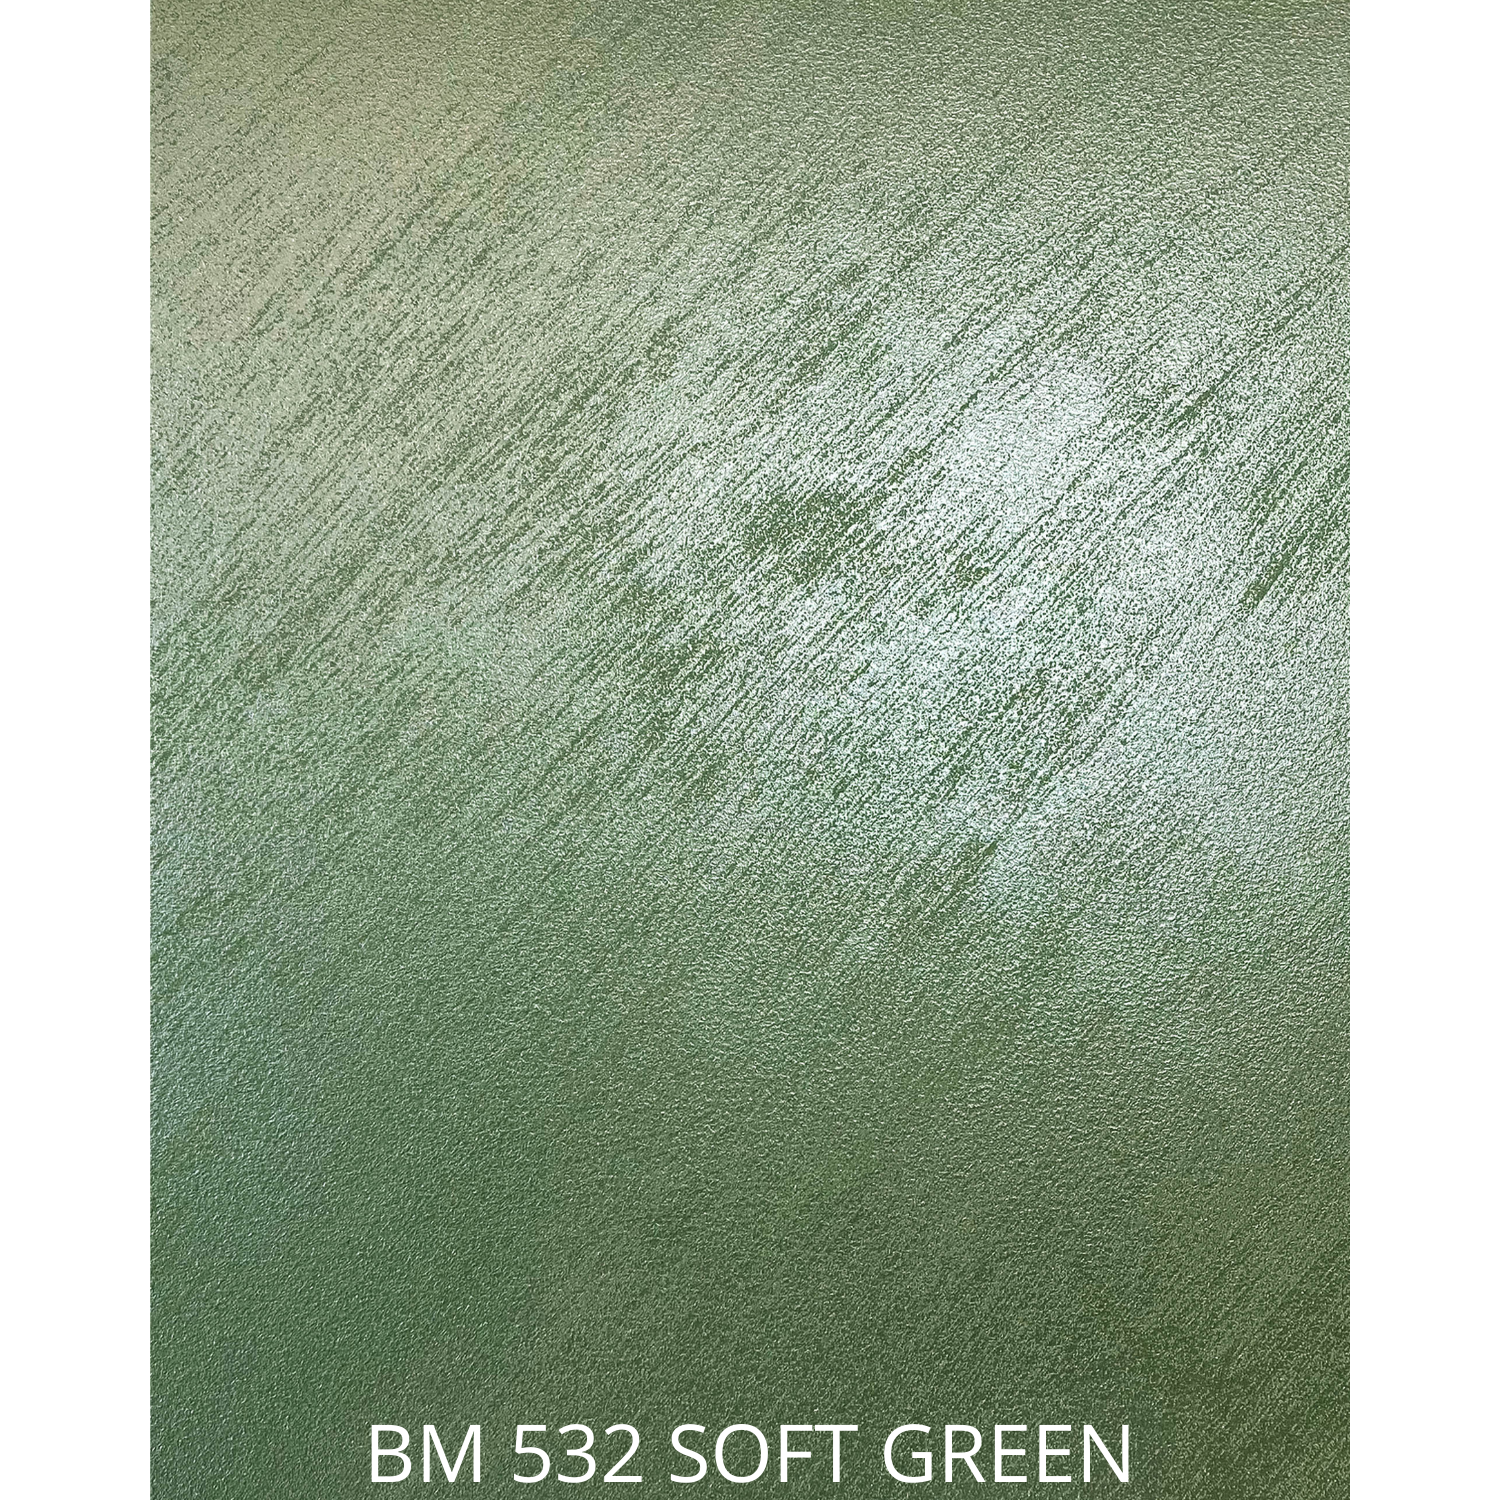 BM 532 SOFT GREEN